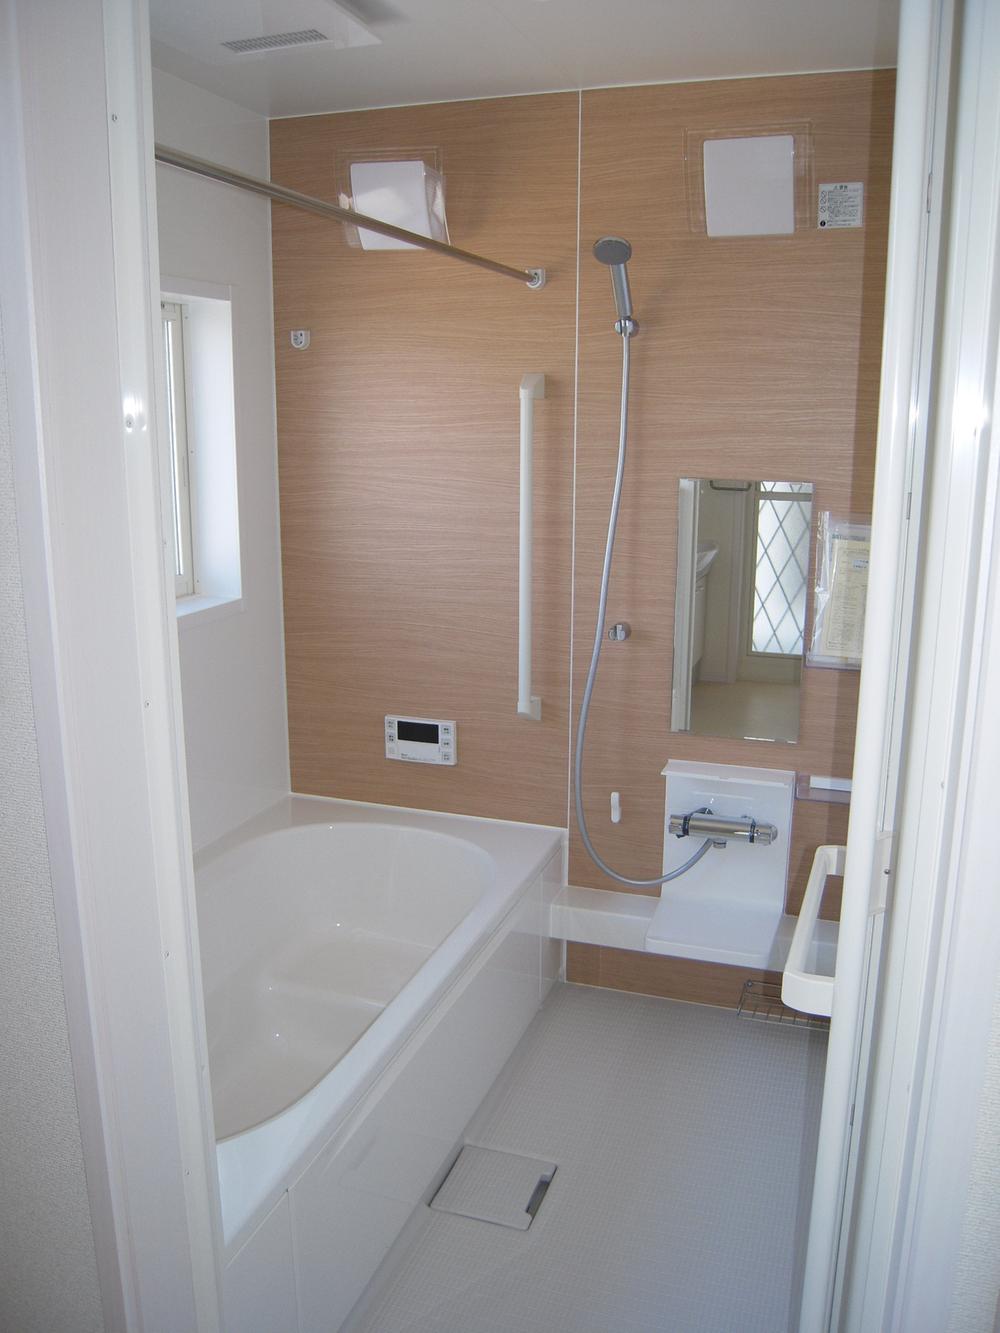 Bathroom. All dwelling unit bathroom dryer standard equipment. The window is also large, bright bathroom.